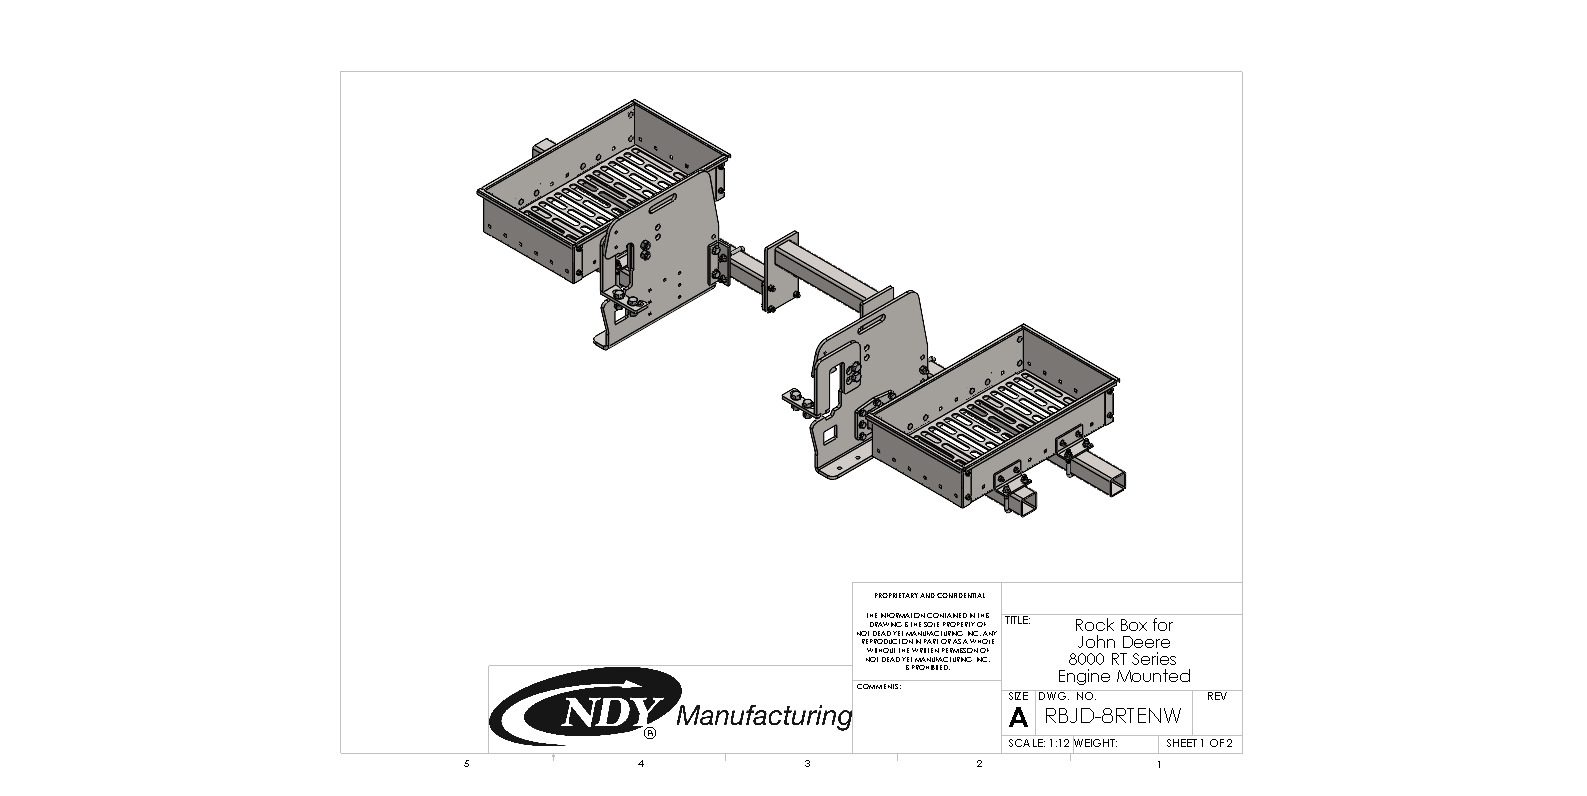 NDY Tractor Rock Box kit fits John Deere RBJD-3800